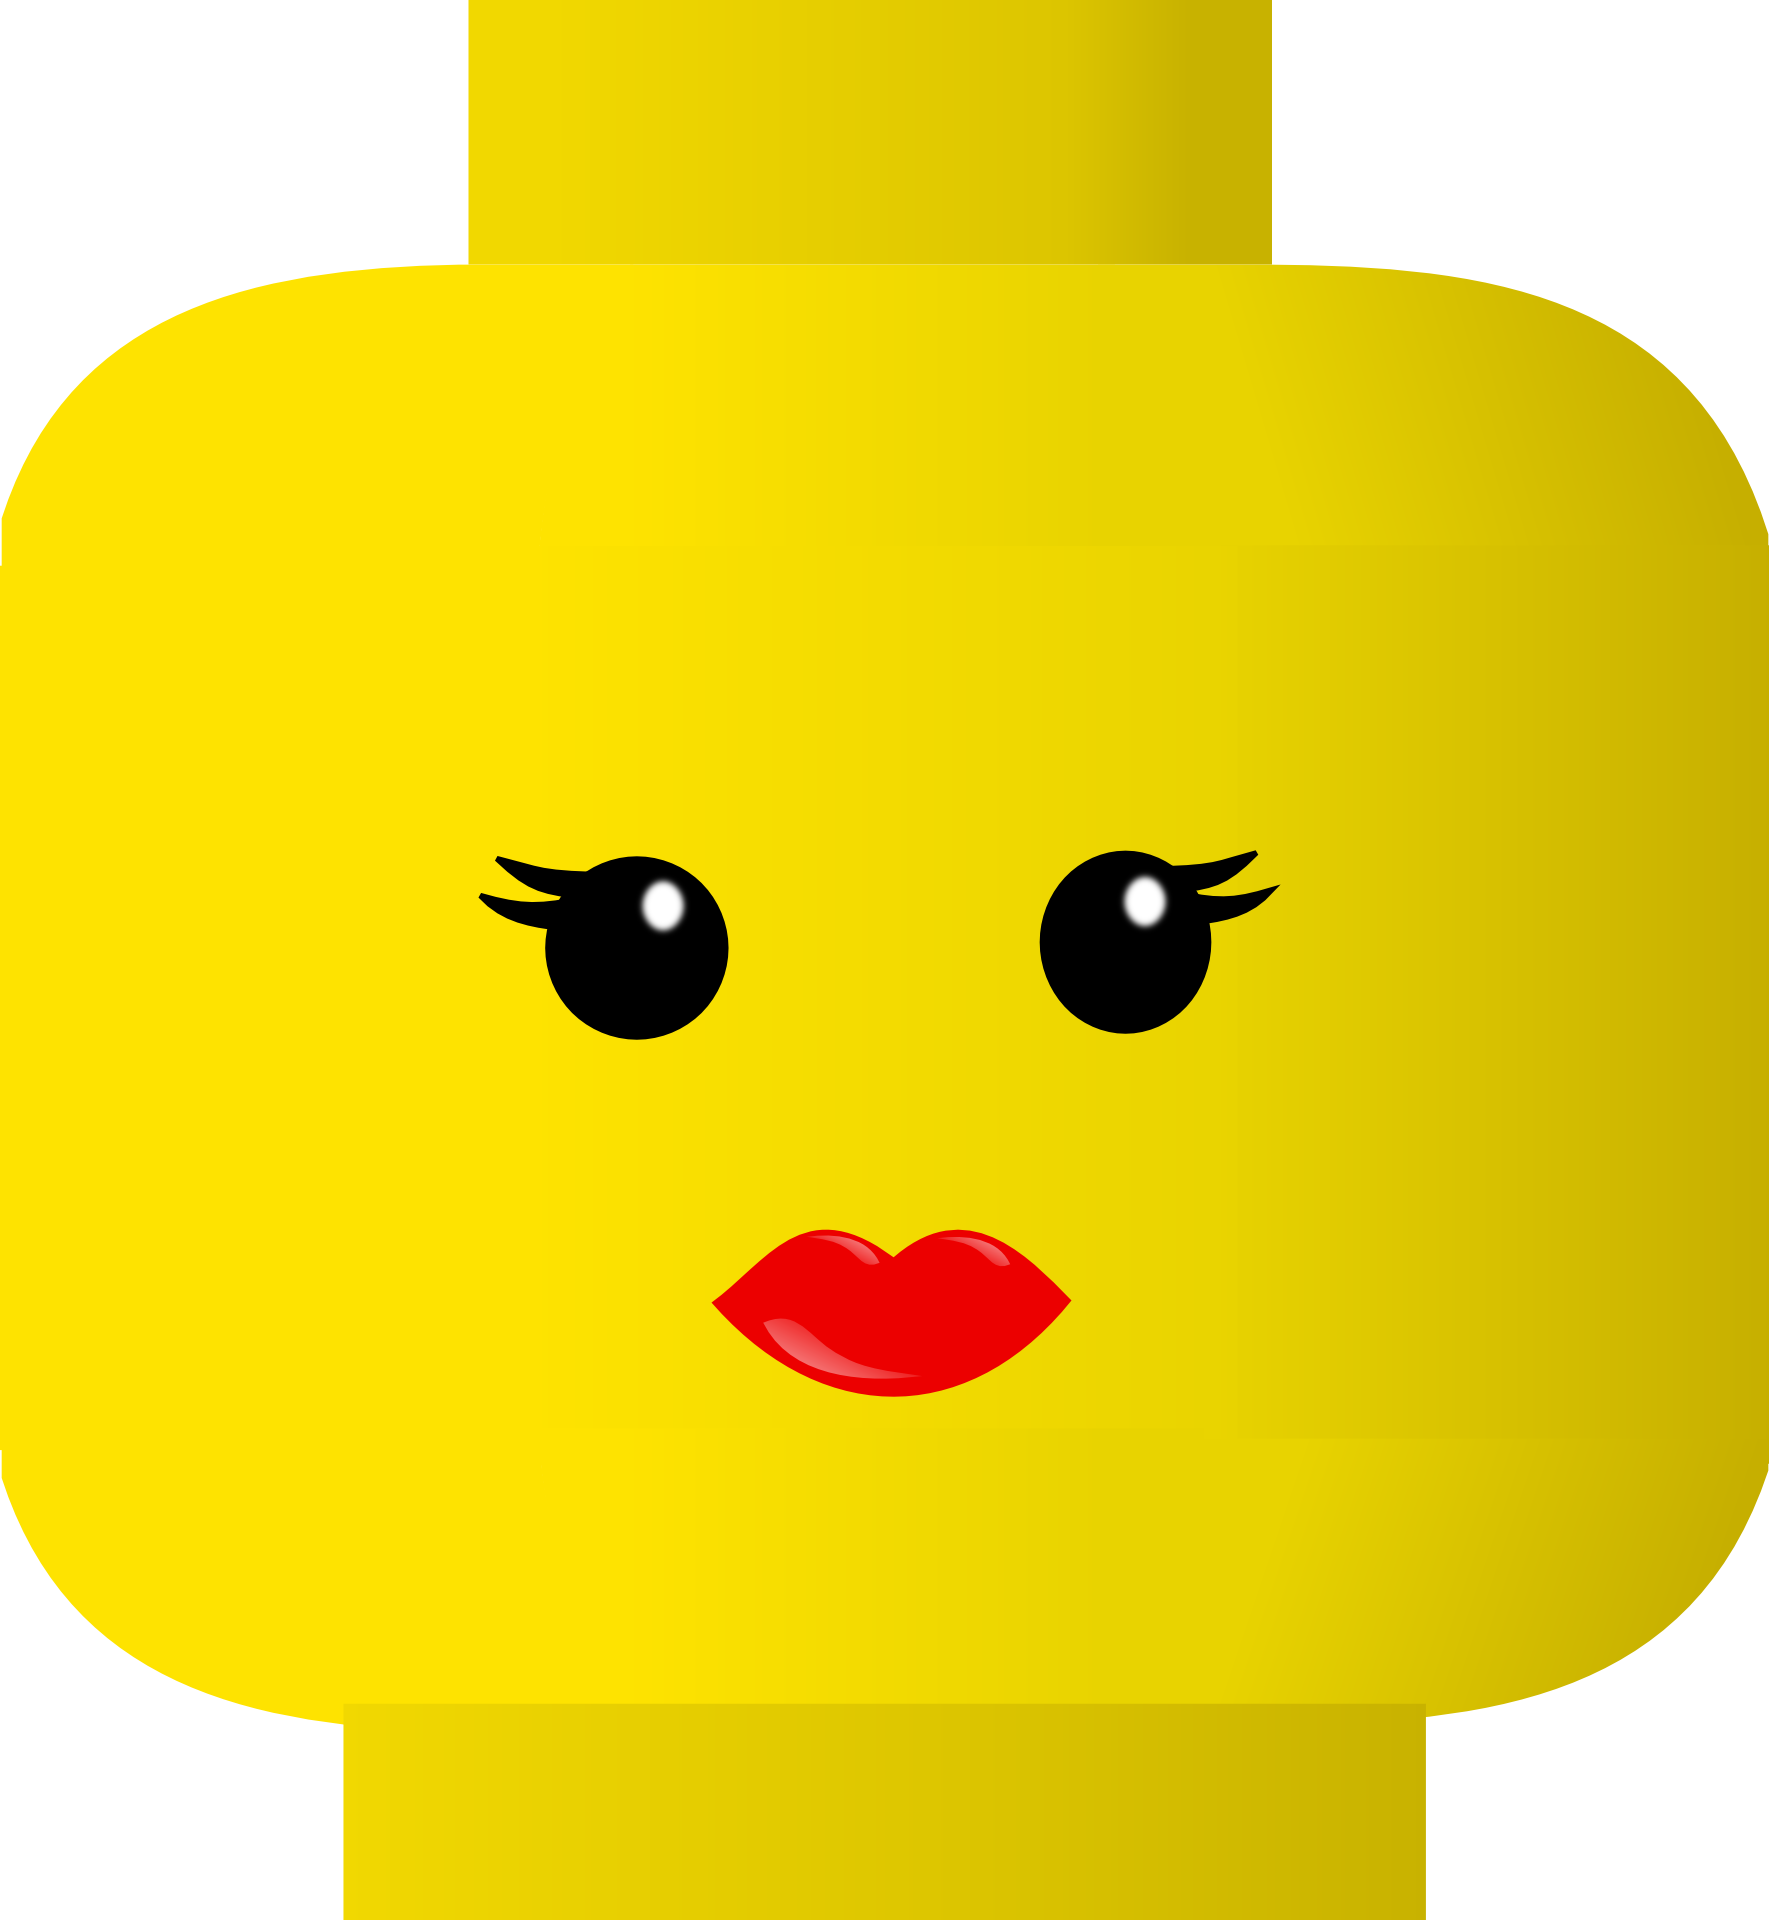 Legos clipart yellow clipart. 